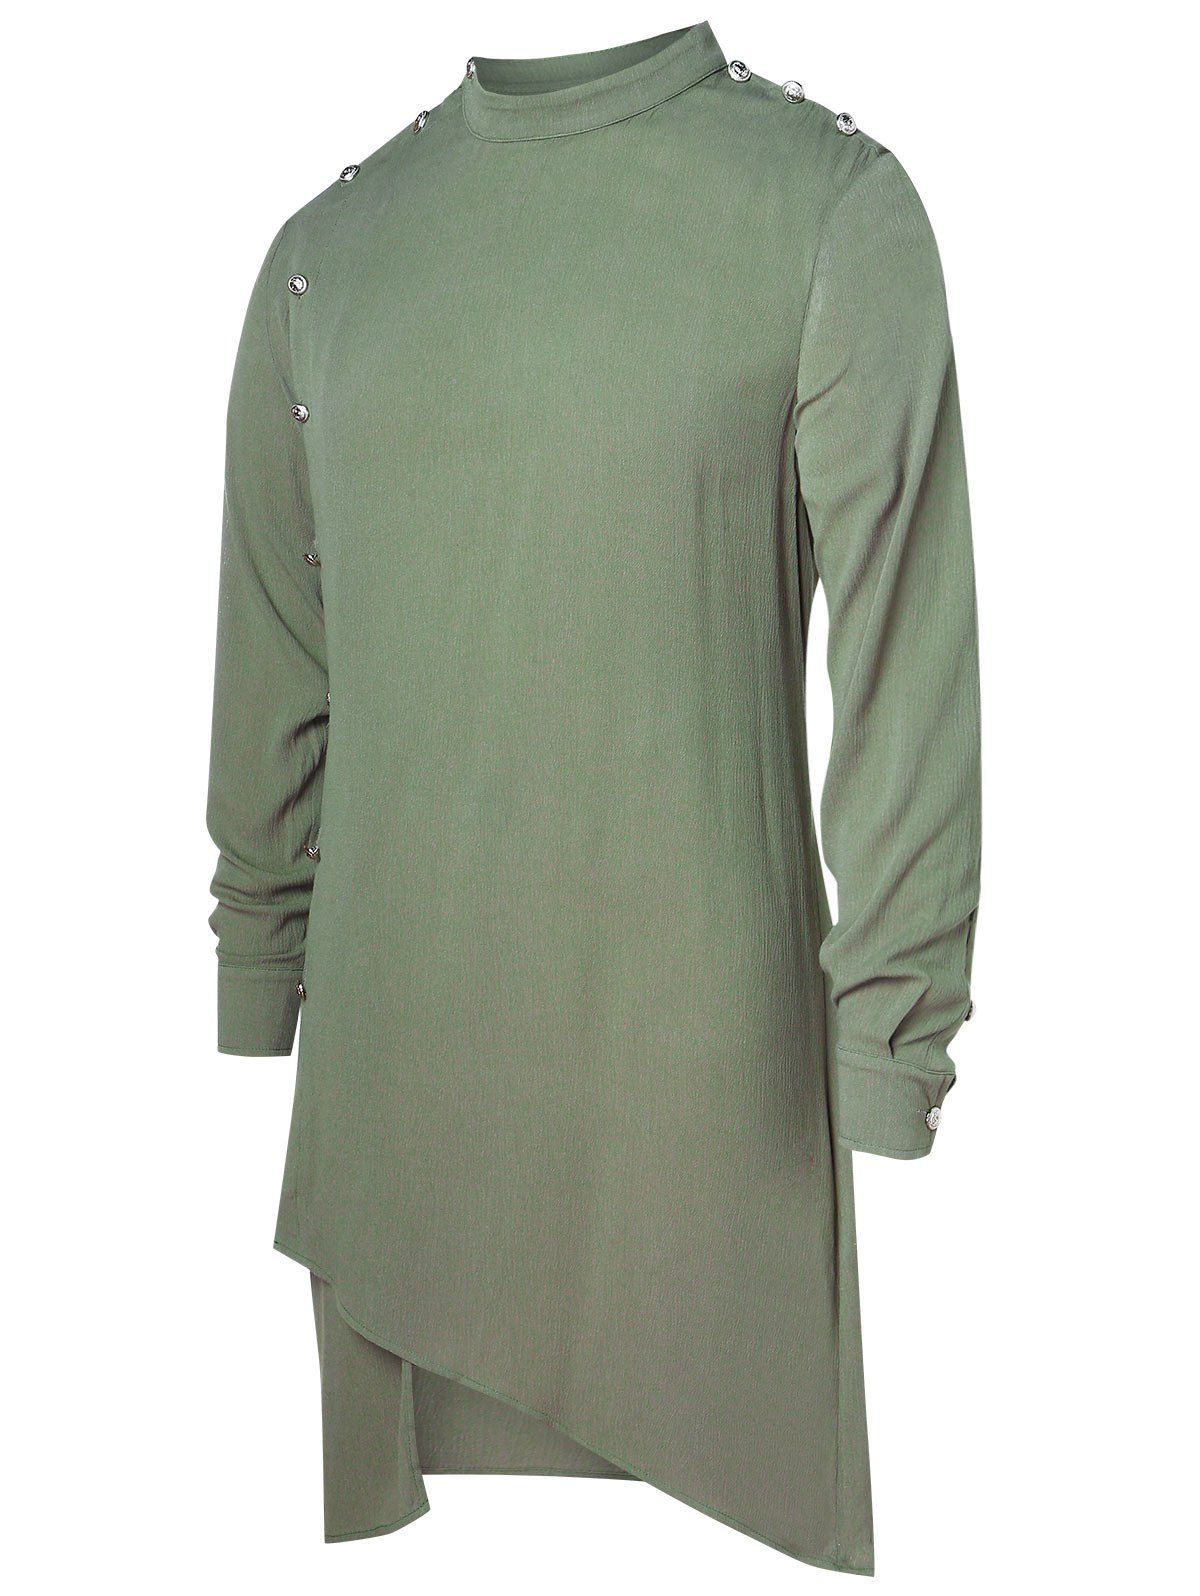 Asymmetric Stand Collar Longline T-shirt - SEA GREEN M